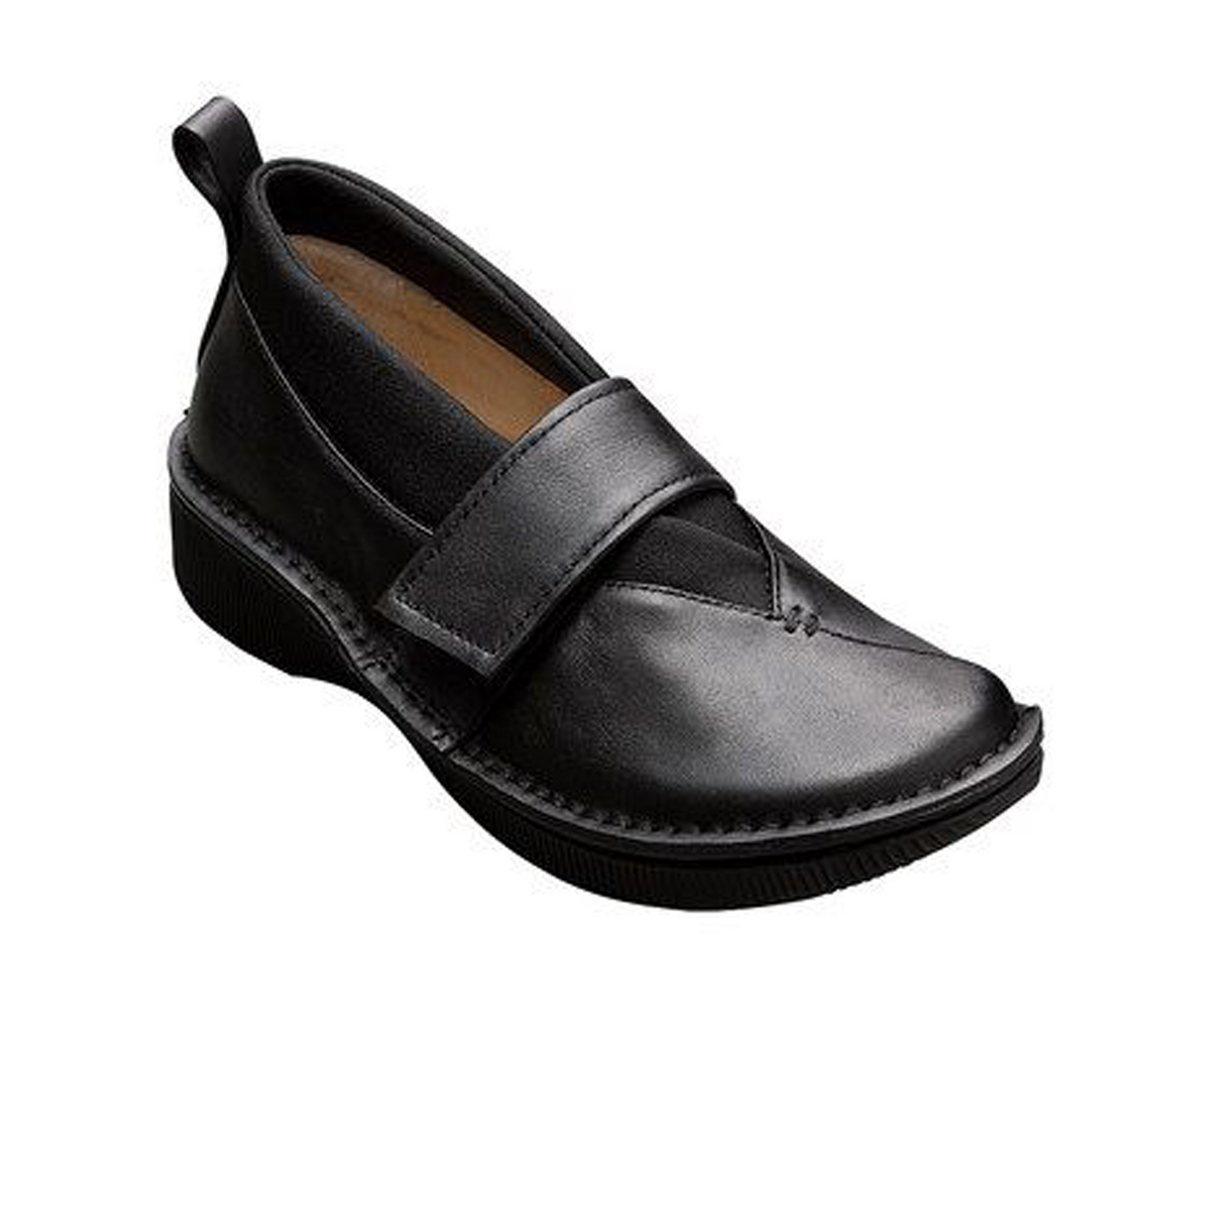 Akaishi Obi Slip On (Women) - Black Dress-Casual - Slip Ons - The Heel Shoe Fitters